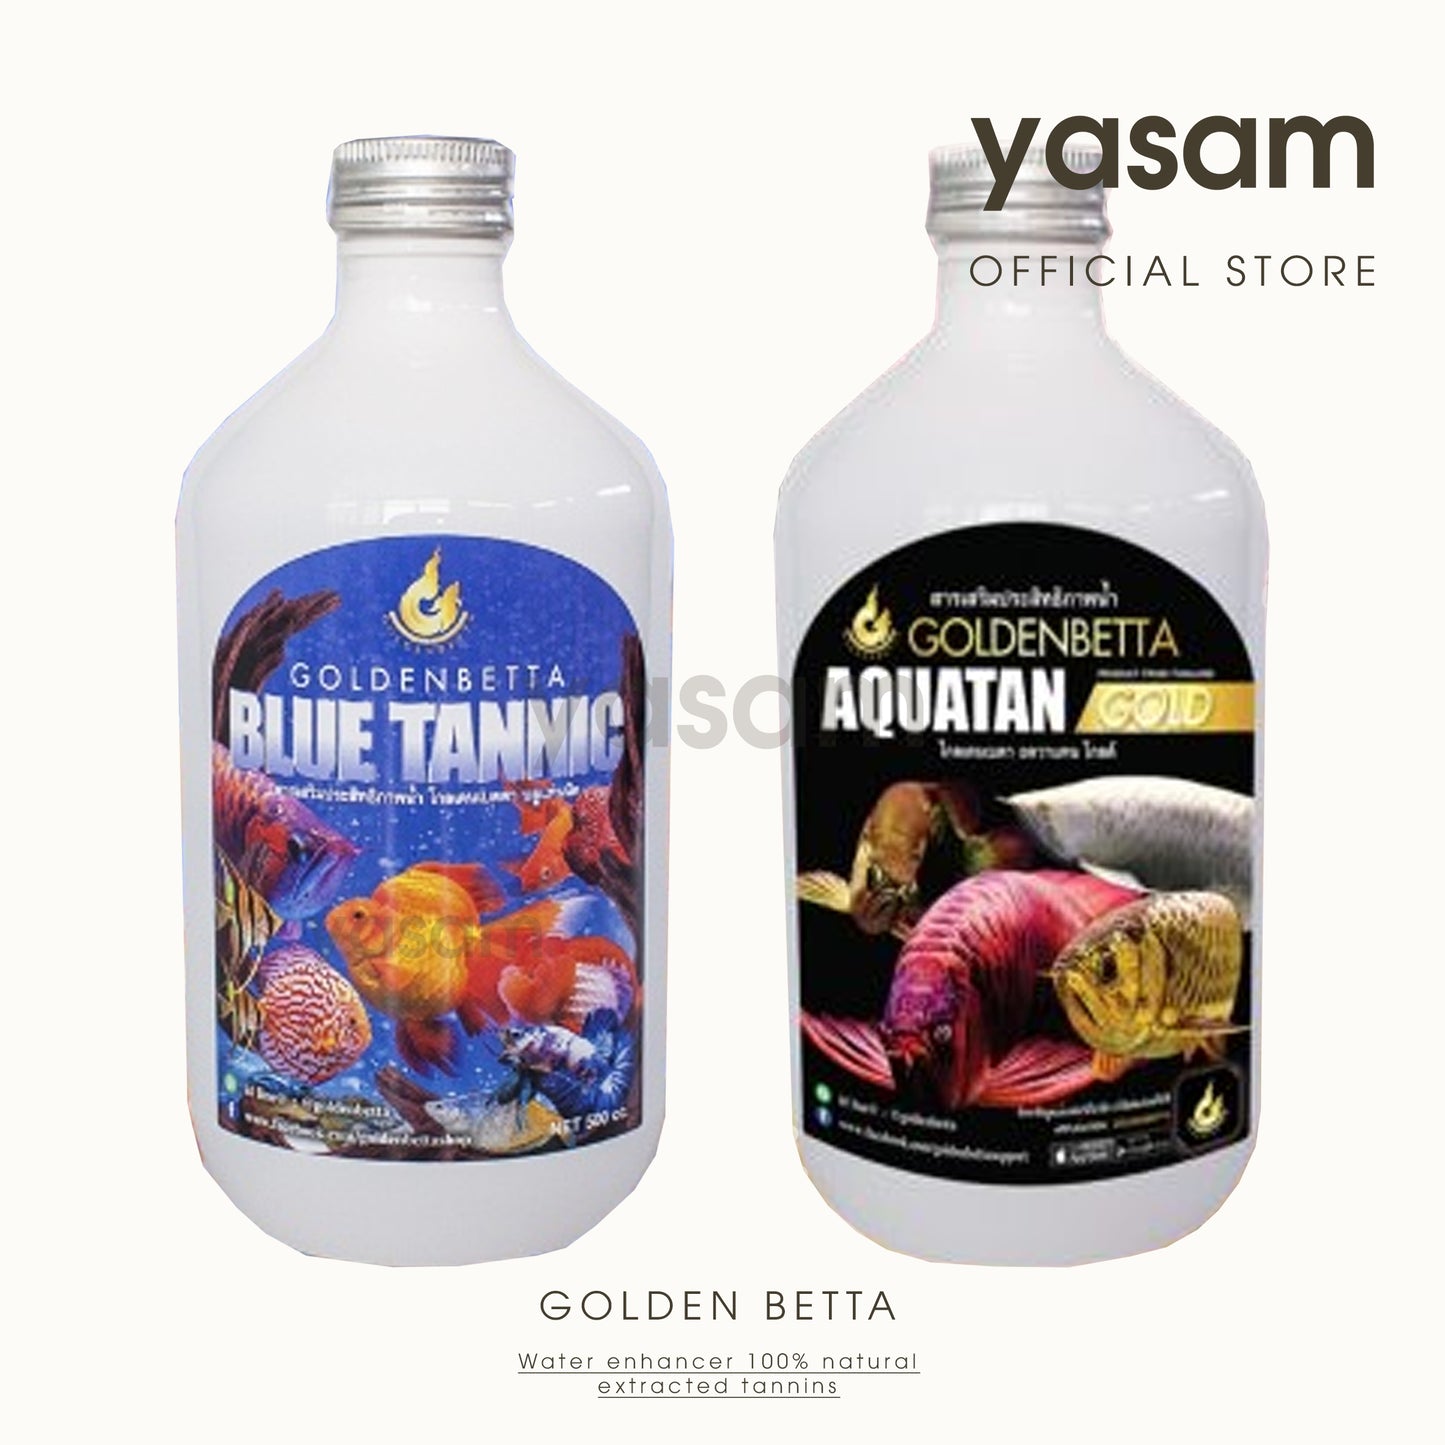 GOLDEN BETTA - Tanin Solution Aquatan / Blue Tannic 